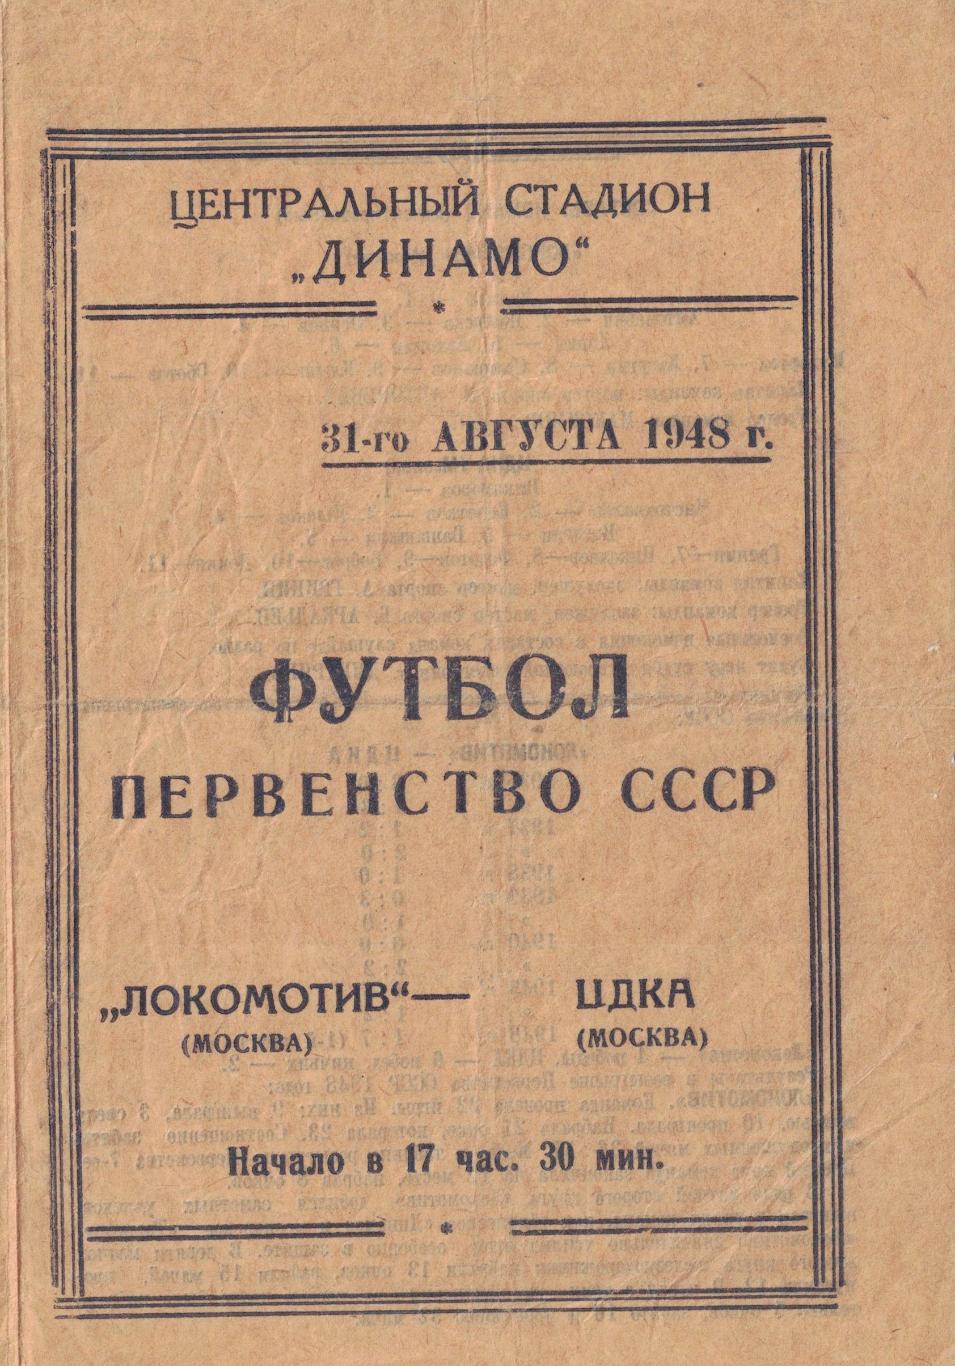 Локомотив Москва - ЦДКА 31.08.1948 Чемпионат СССР